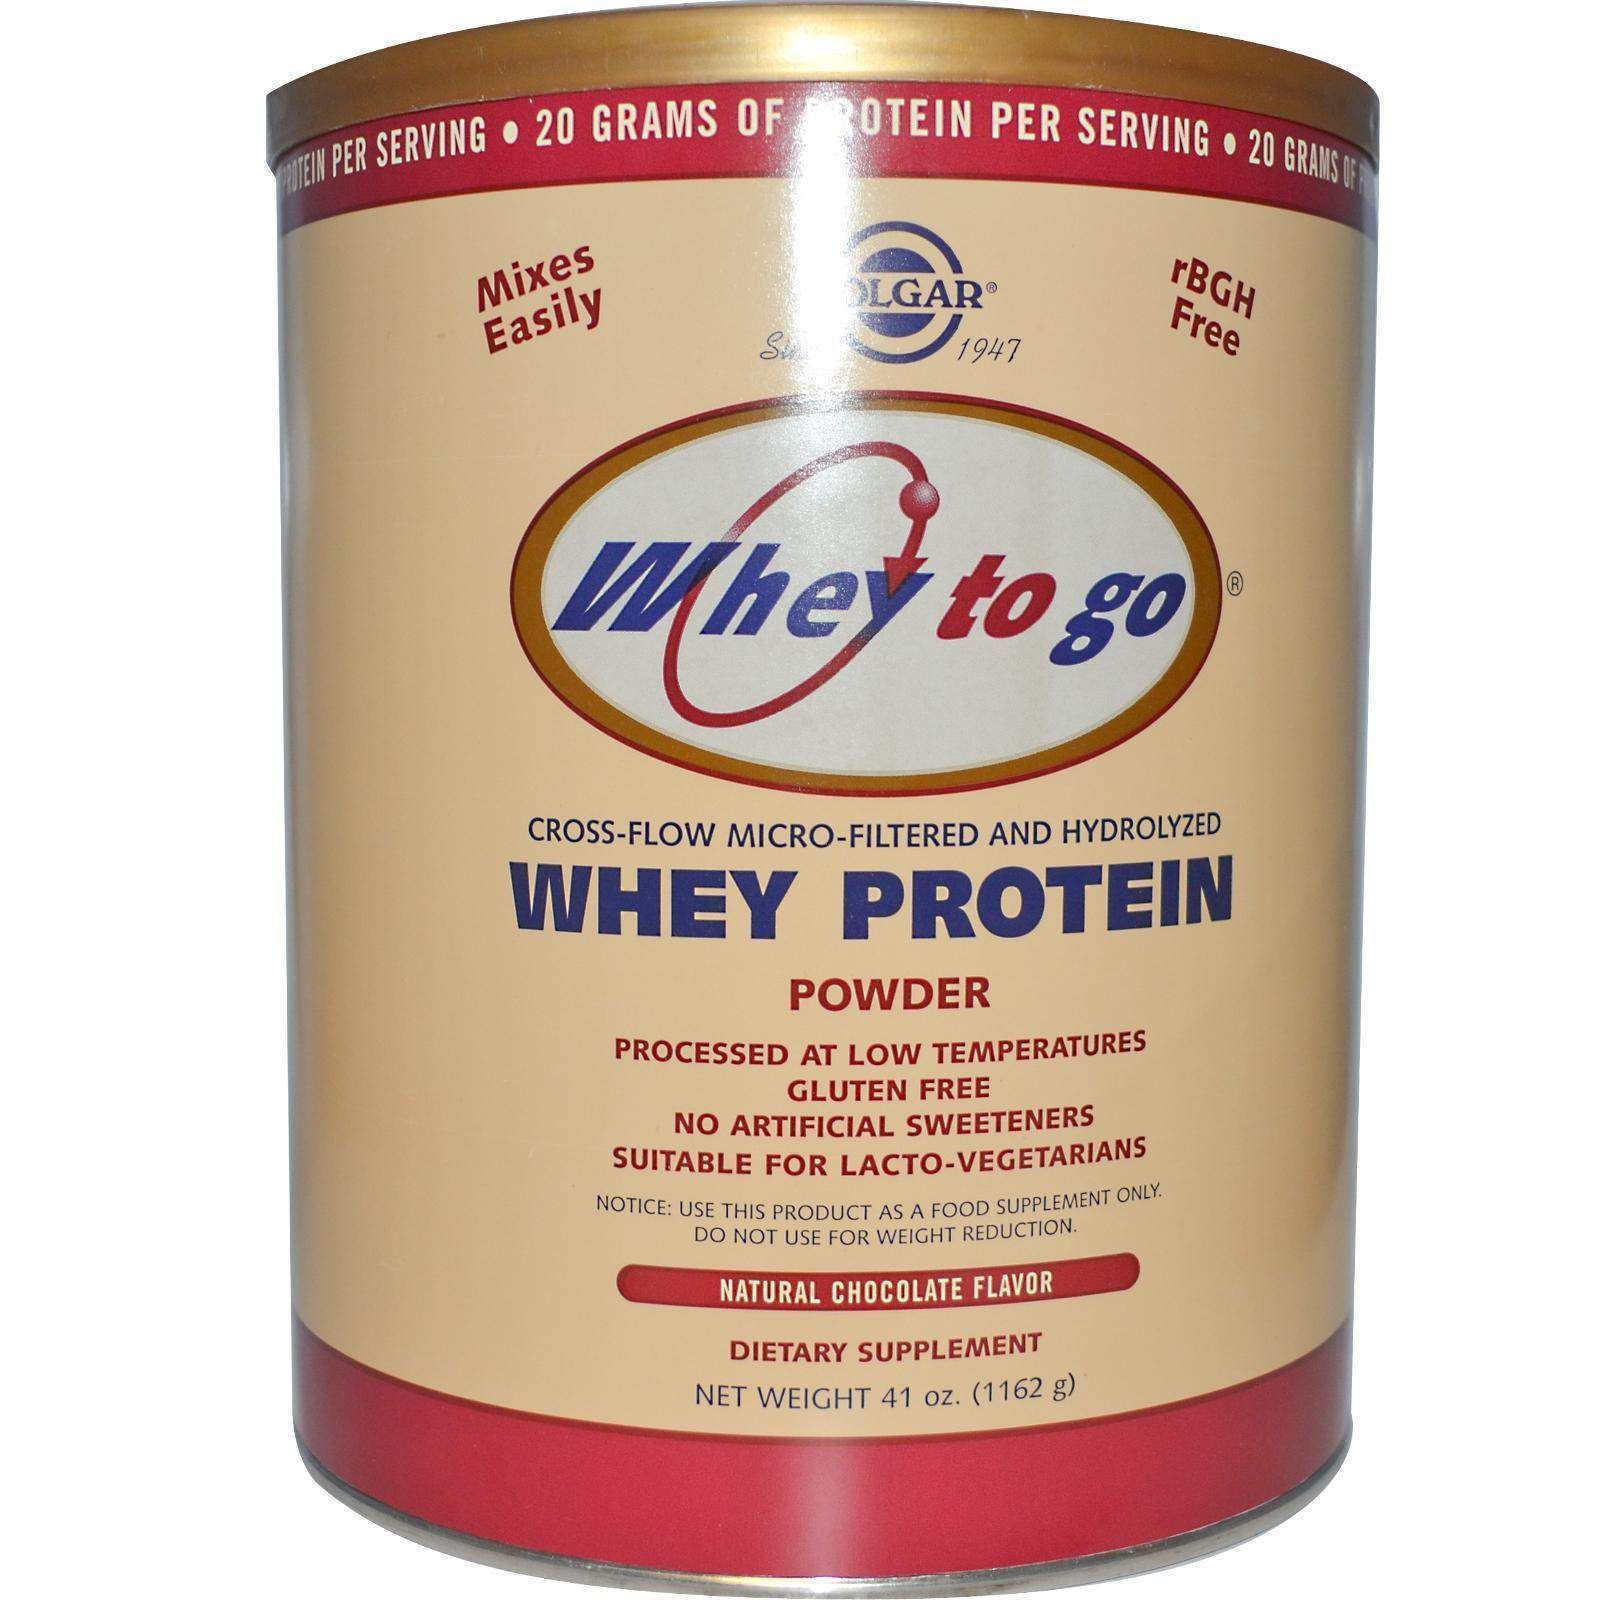 Whey Protein Powder Solgar. Протеин со вкусом шоколада. Вэй ту гоу со вкусом шоколада 454 г. Солгар белковая сыворотка